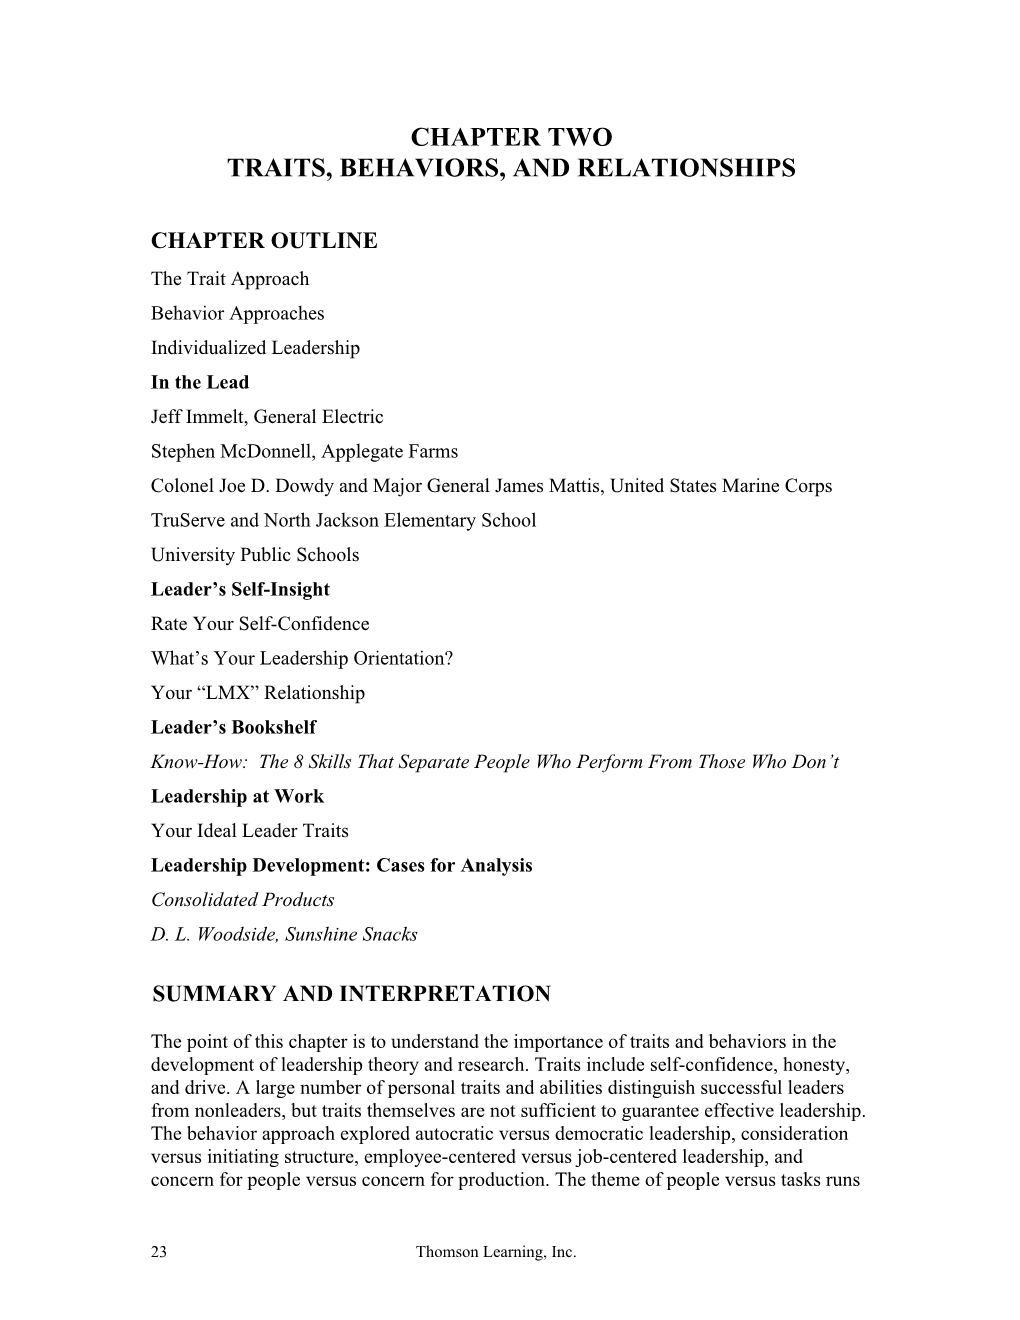 Traits, Behaviors, and Relationships